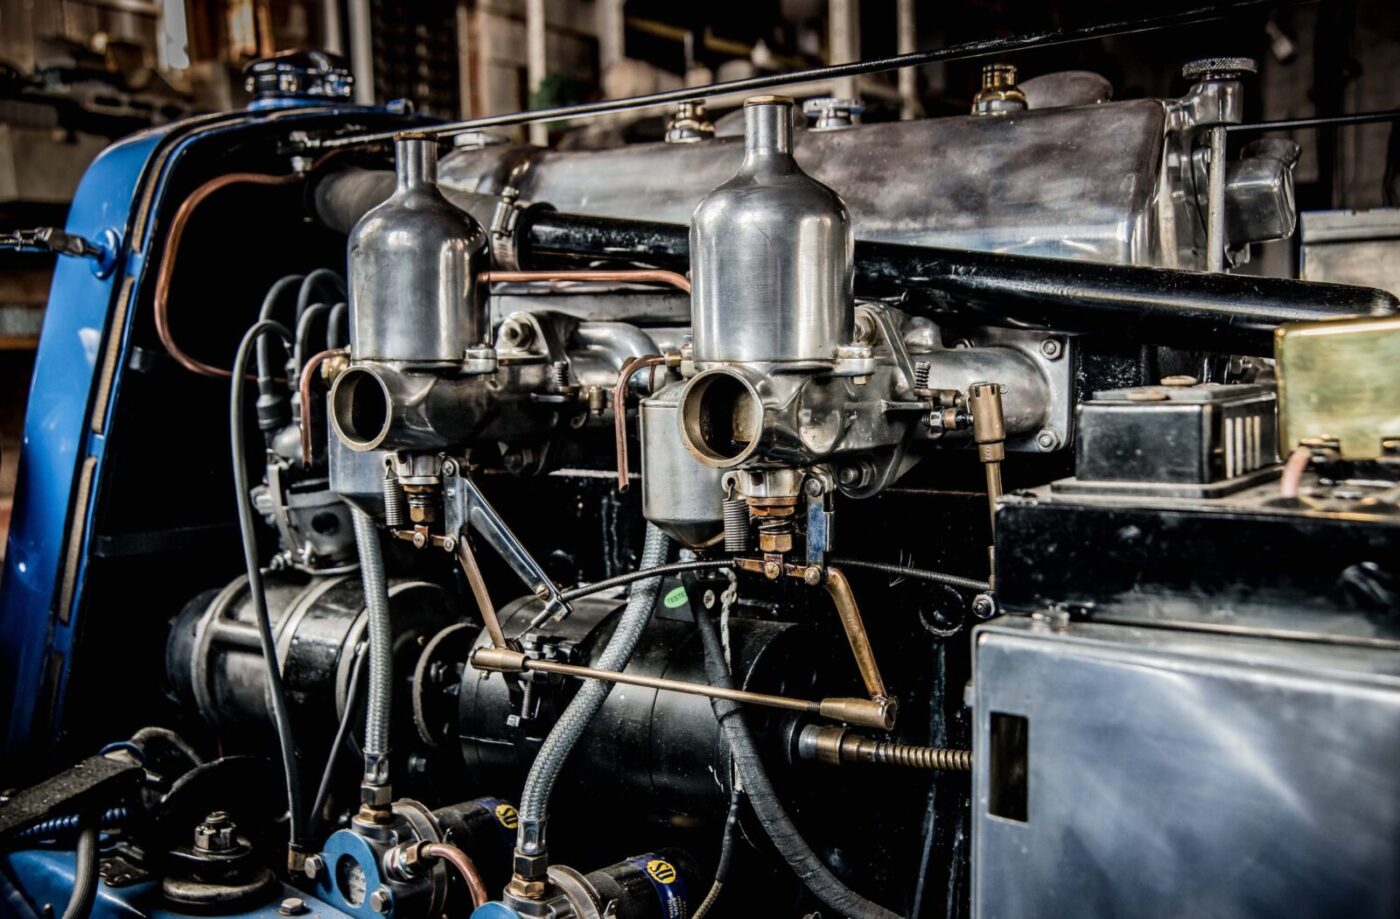 Aston Martin Speed Model engine detail